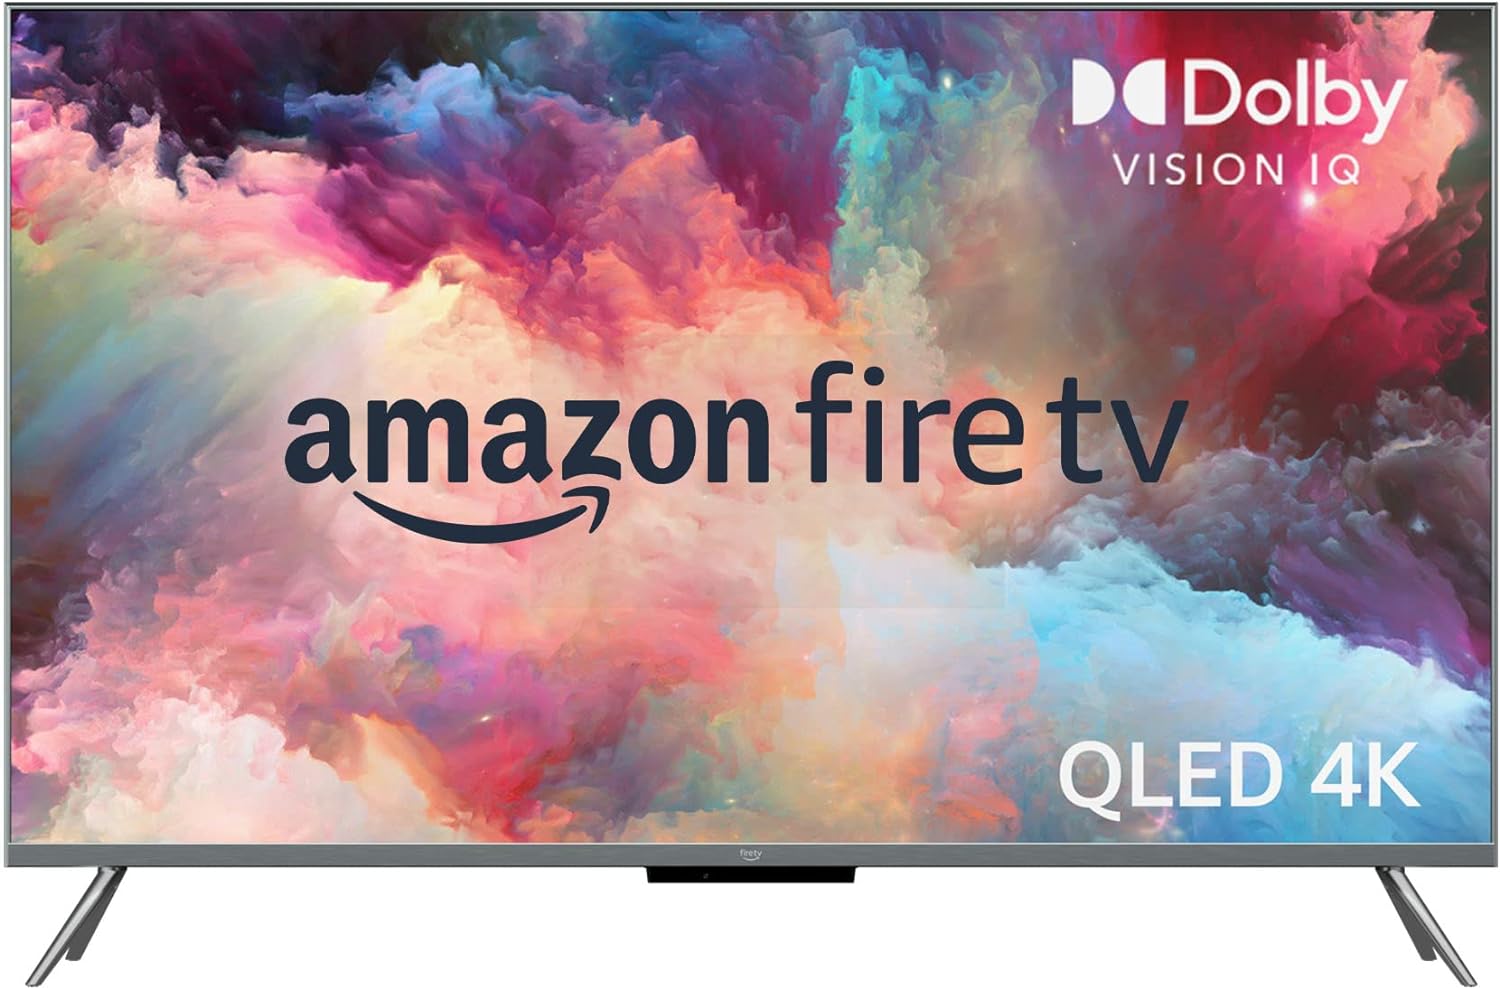 Amazon Fire TV 55" Omni QLED Series 4K UHD smart TV $399.99